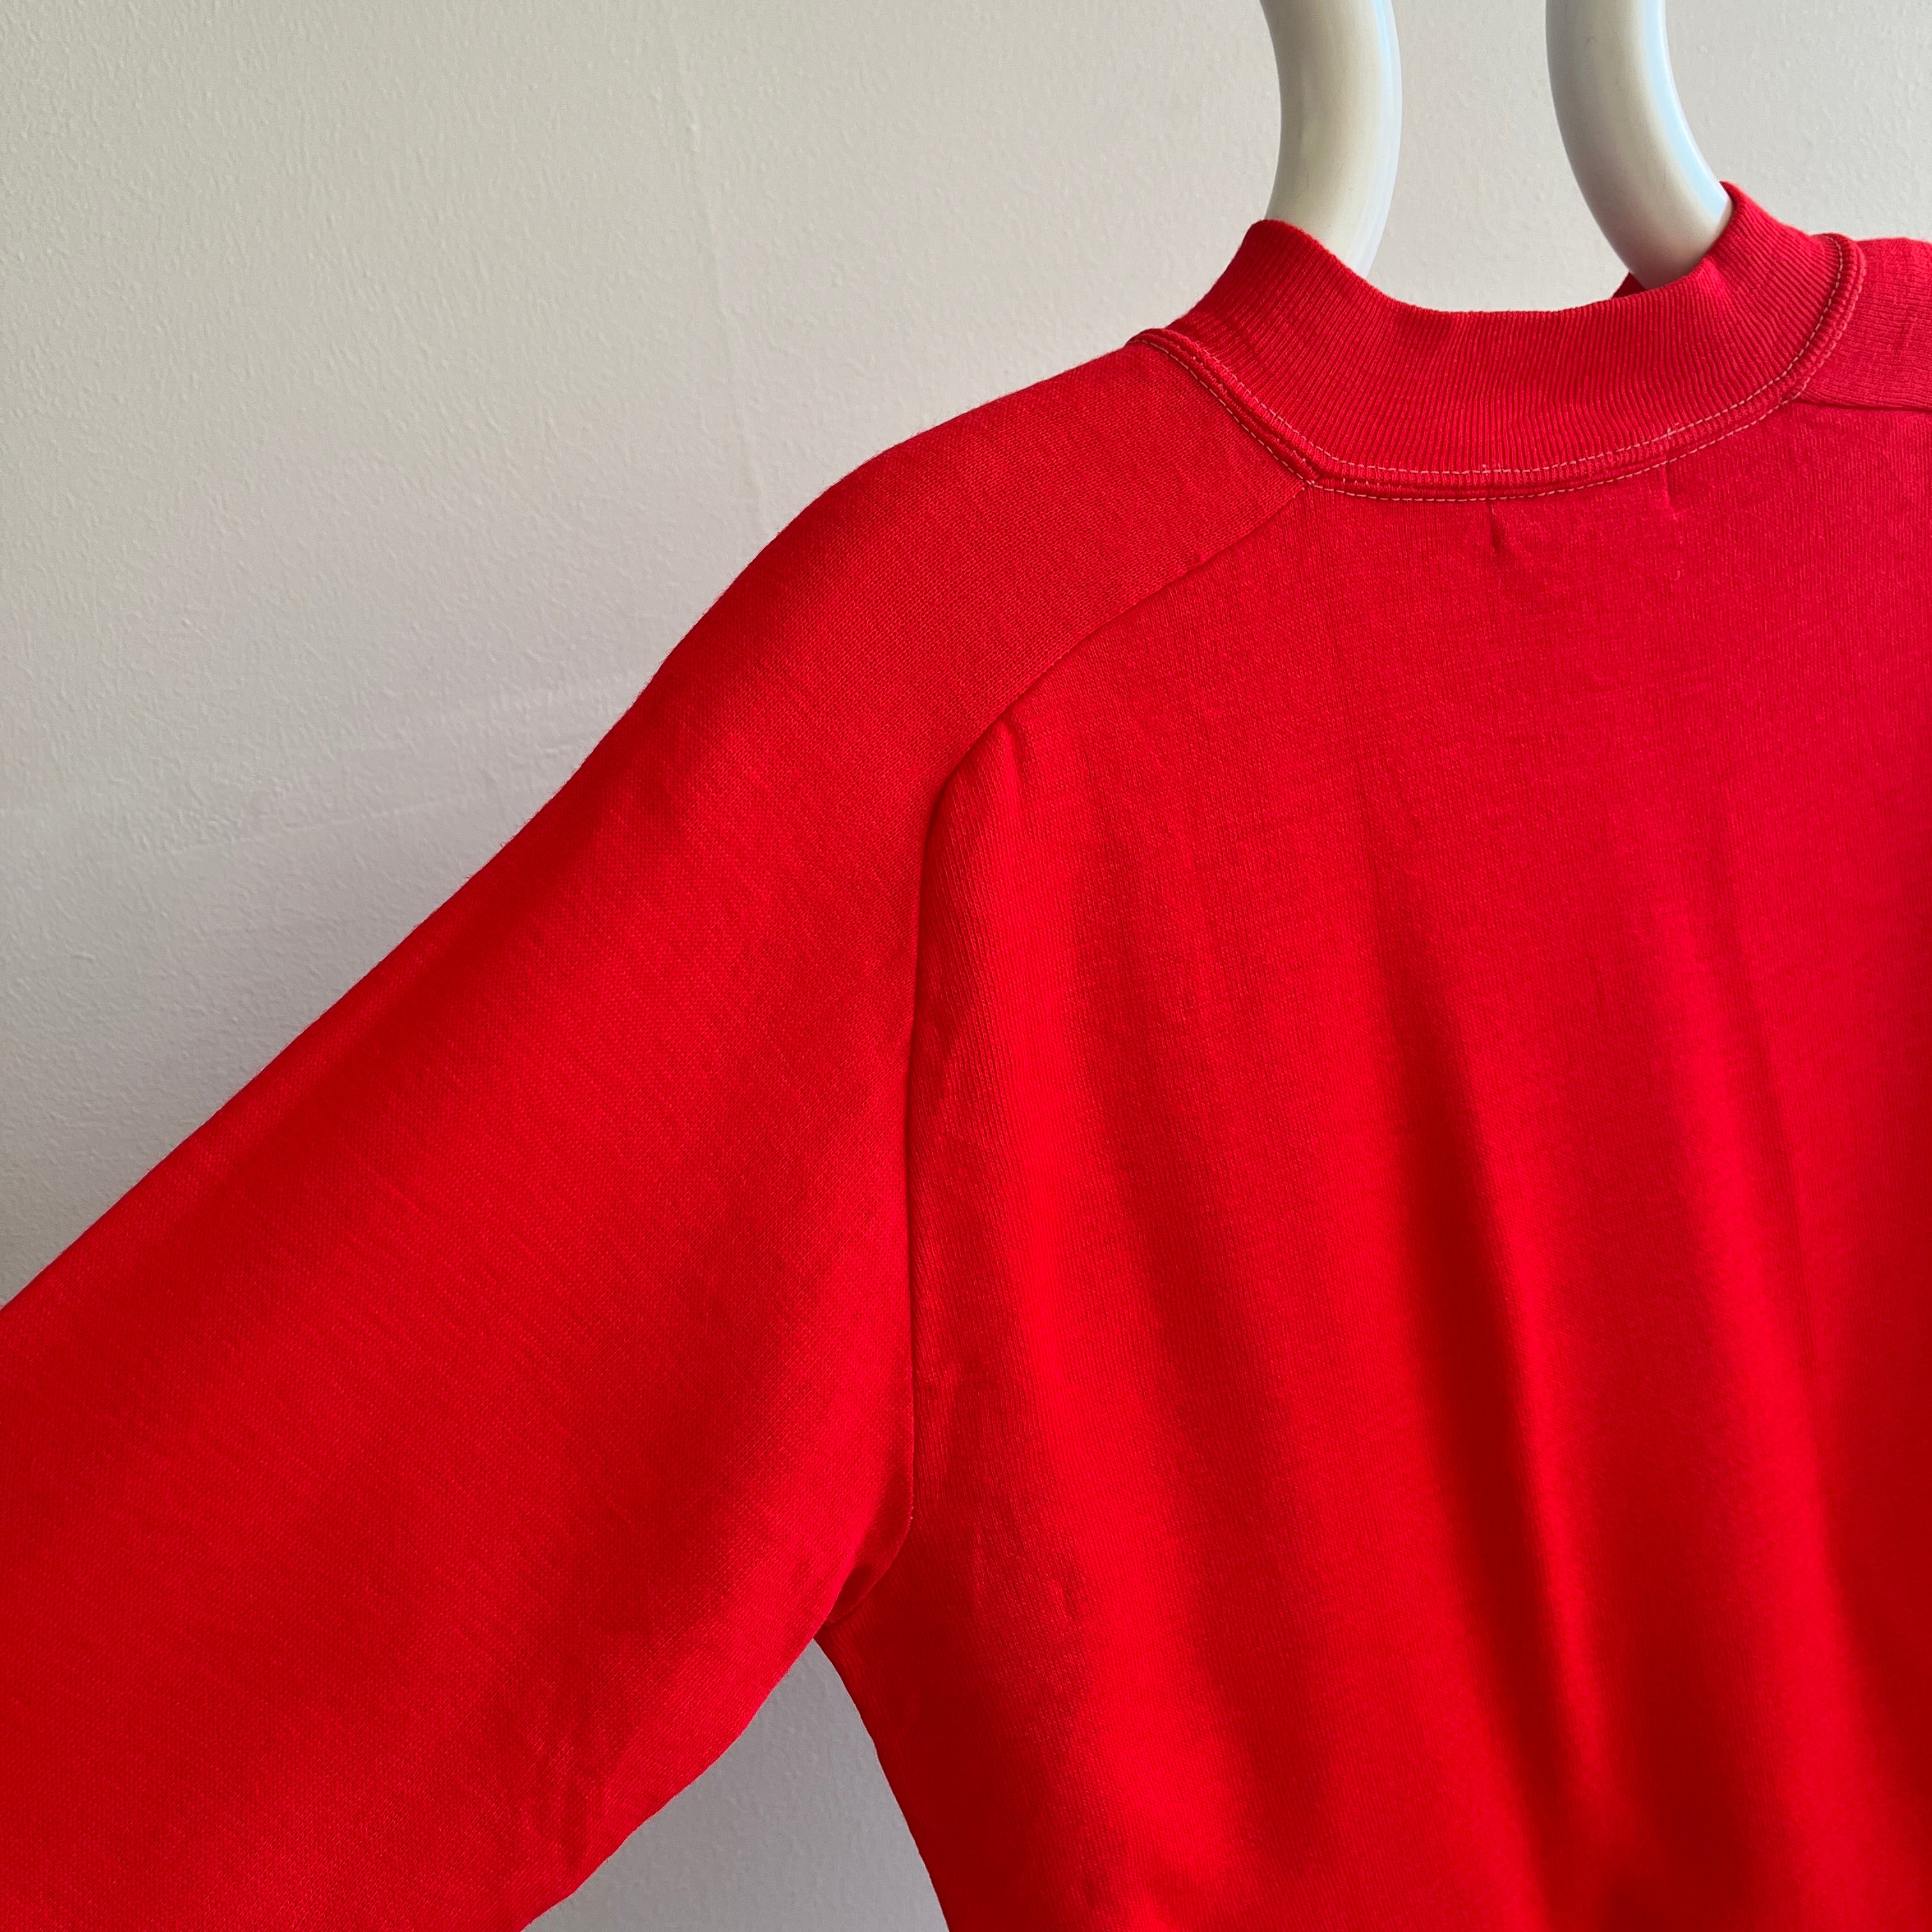 1950/60s Creslan Neon Orange/Red Rare Sweatshirt - regardez la coupe !